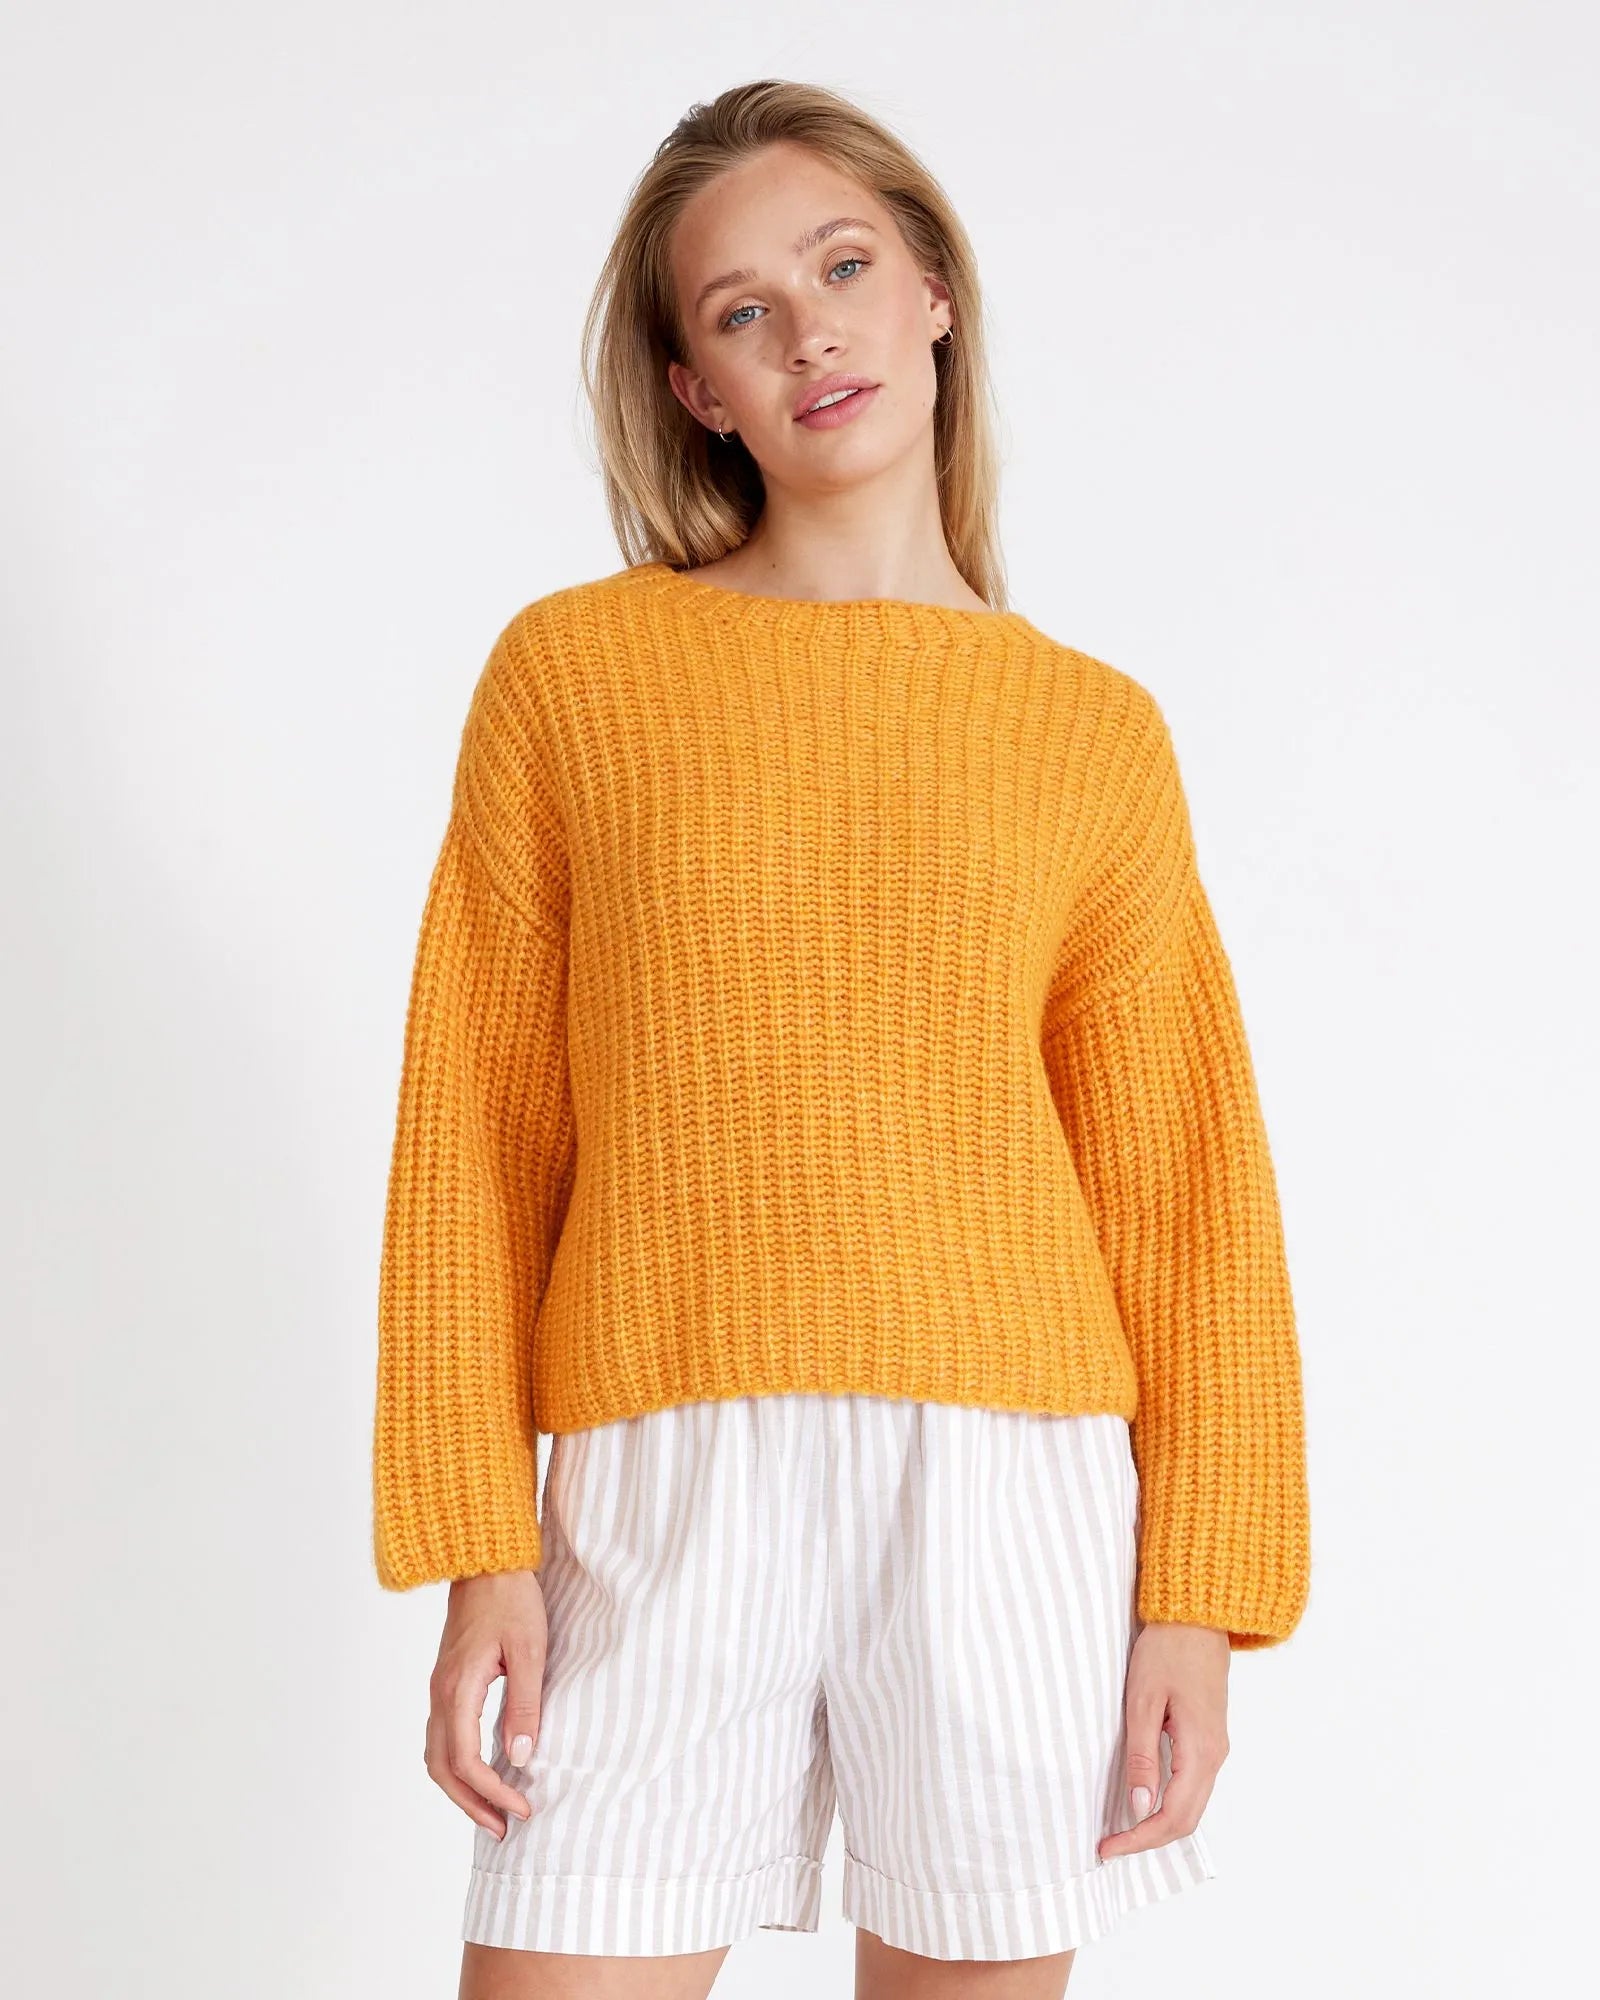 Cajsa Super Soft Knitted Sweater - Bright Marigold